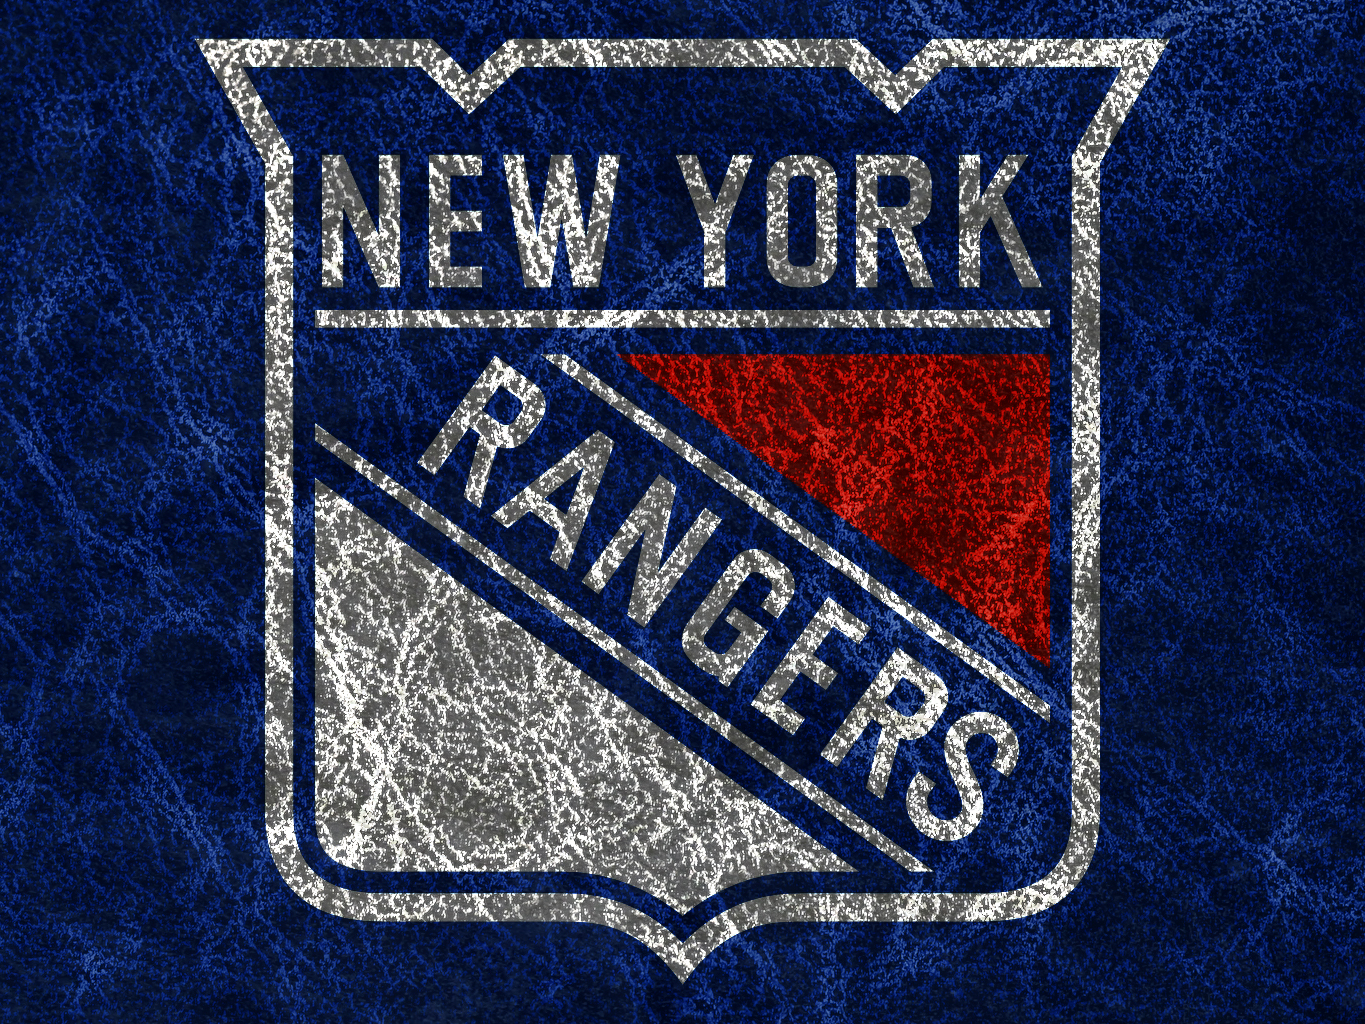 NY Rangers Wallpaper 72 images